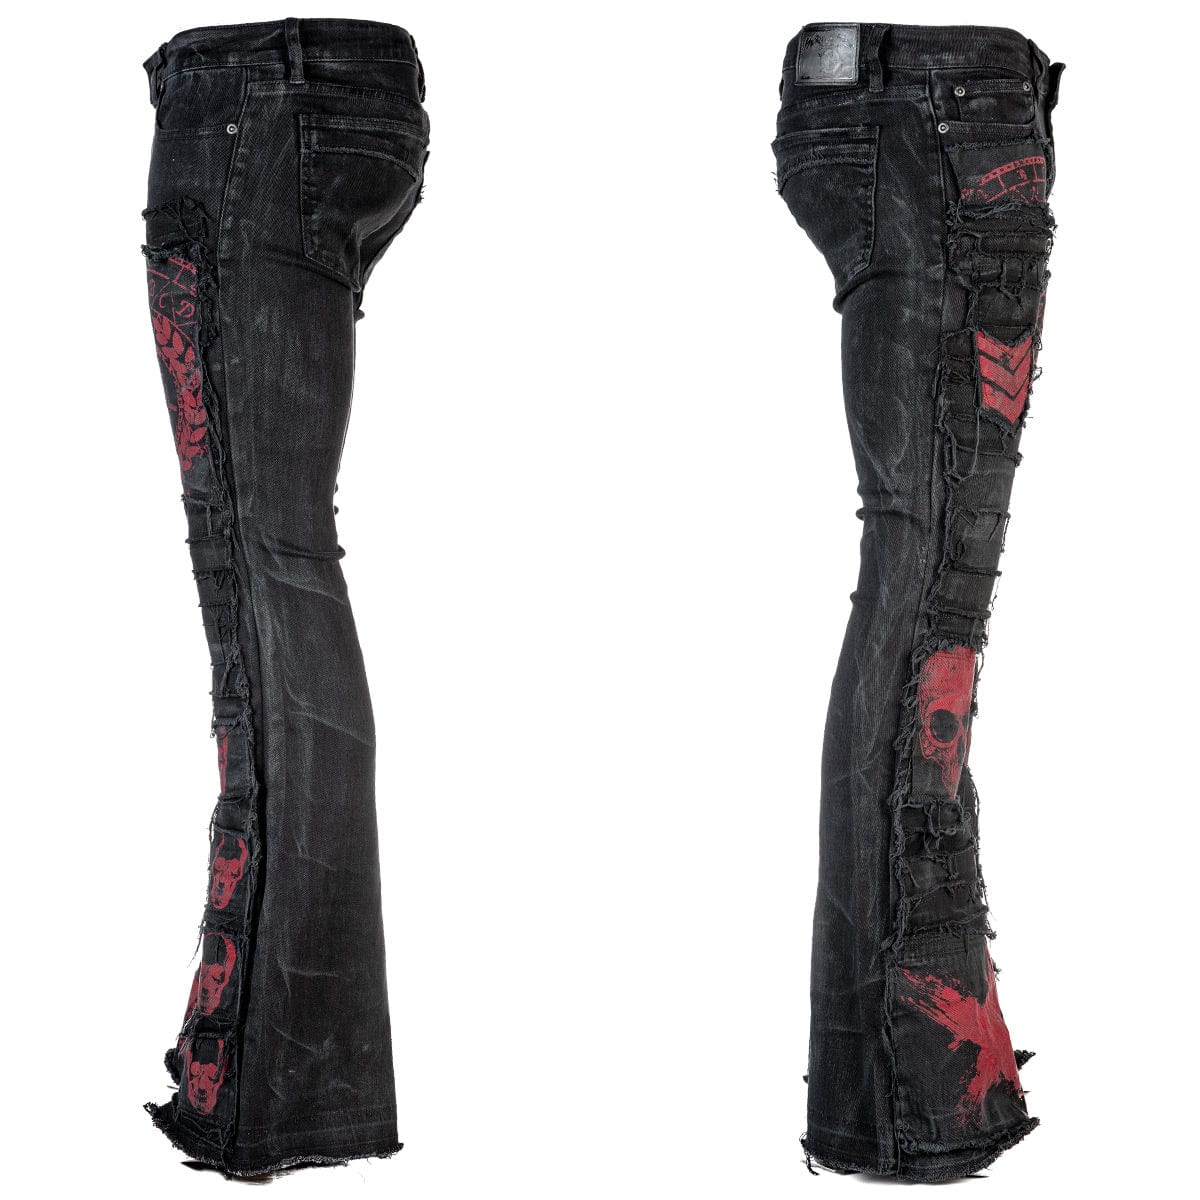 Rockstar Original, Jeans, Rockstar Original Red Lettering Embroidery  Black Denim Jeans